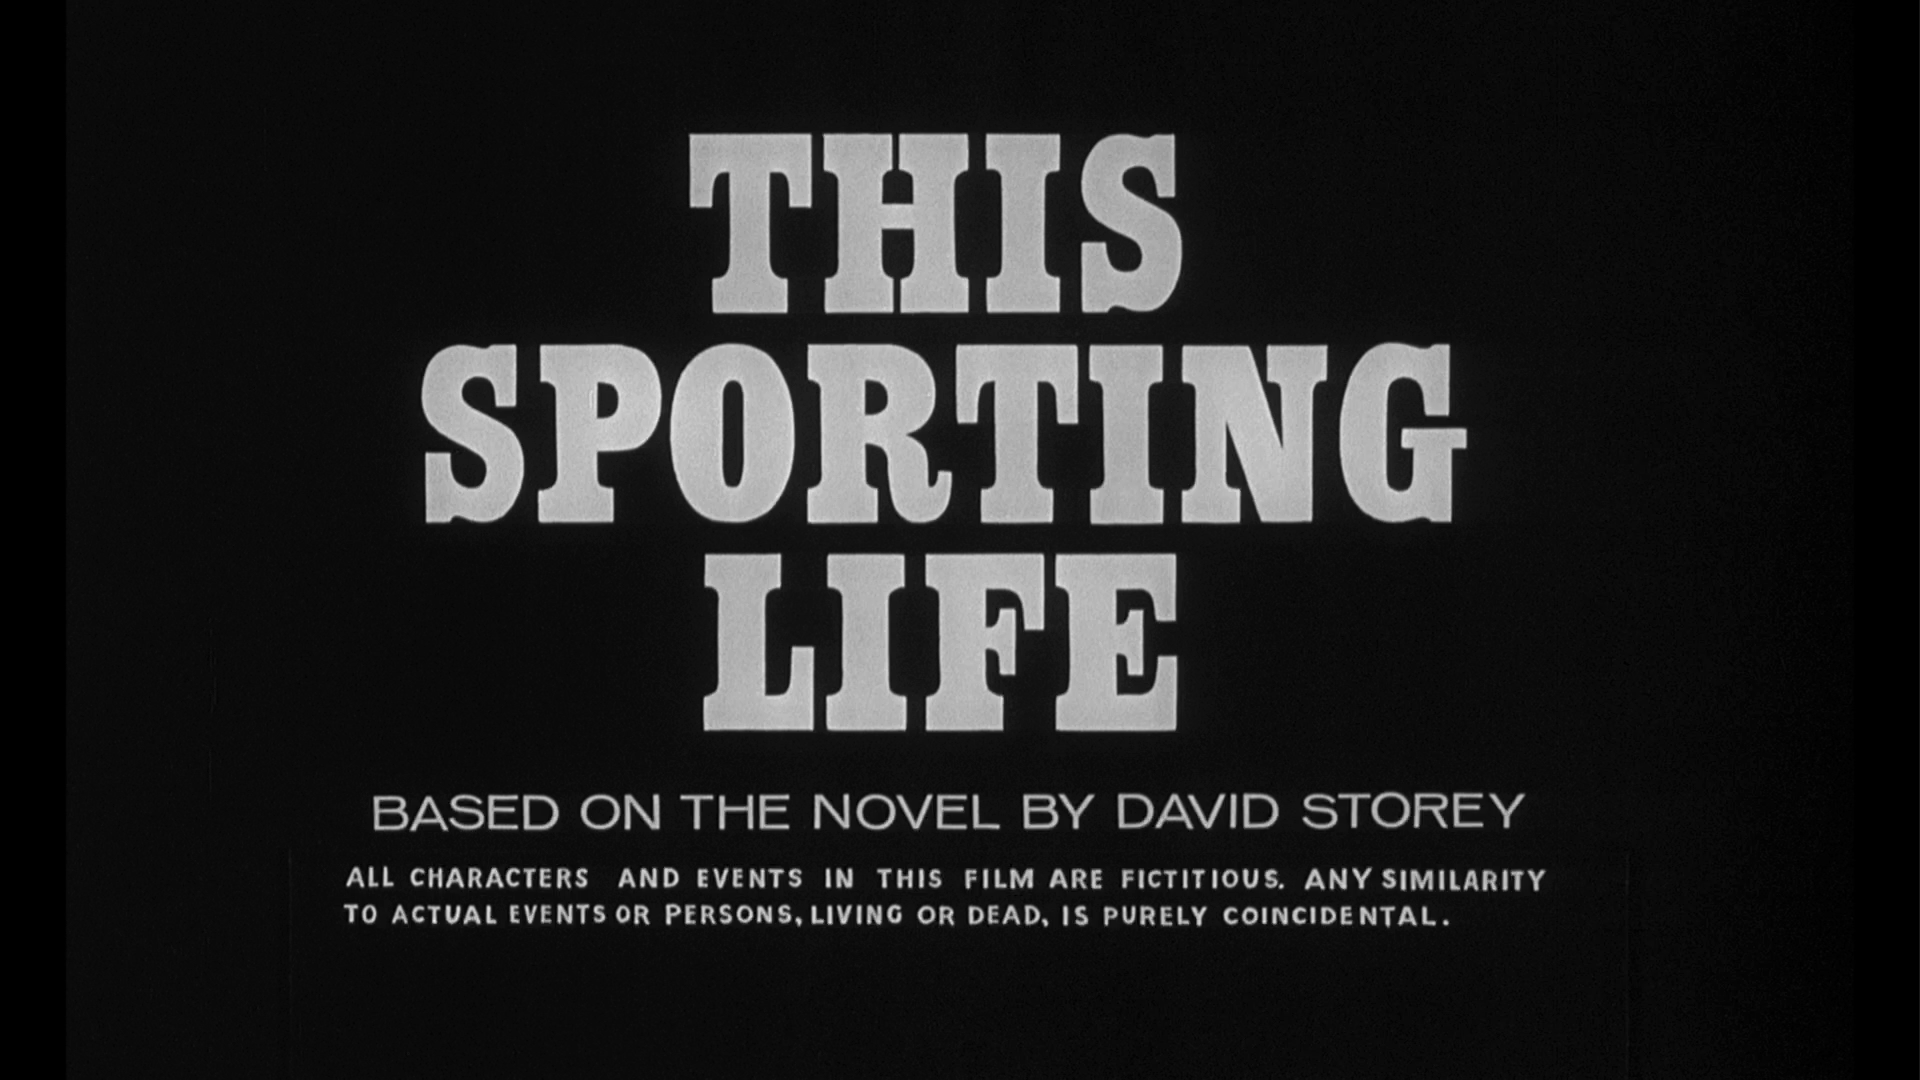 Спортинг лайф. The Sporting Life the Sporting Life. Sport is Life. Спортинг лайф по Музыке.